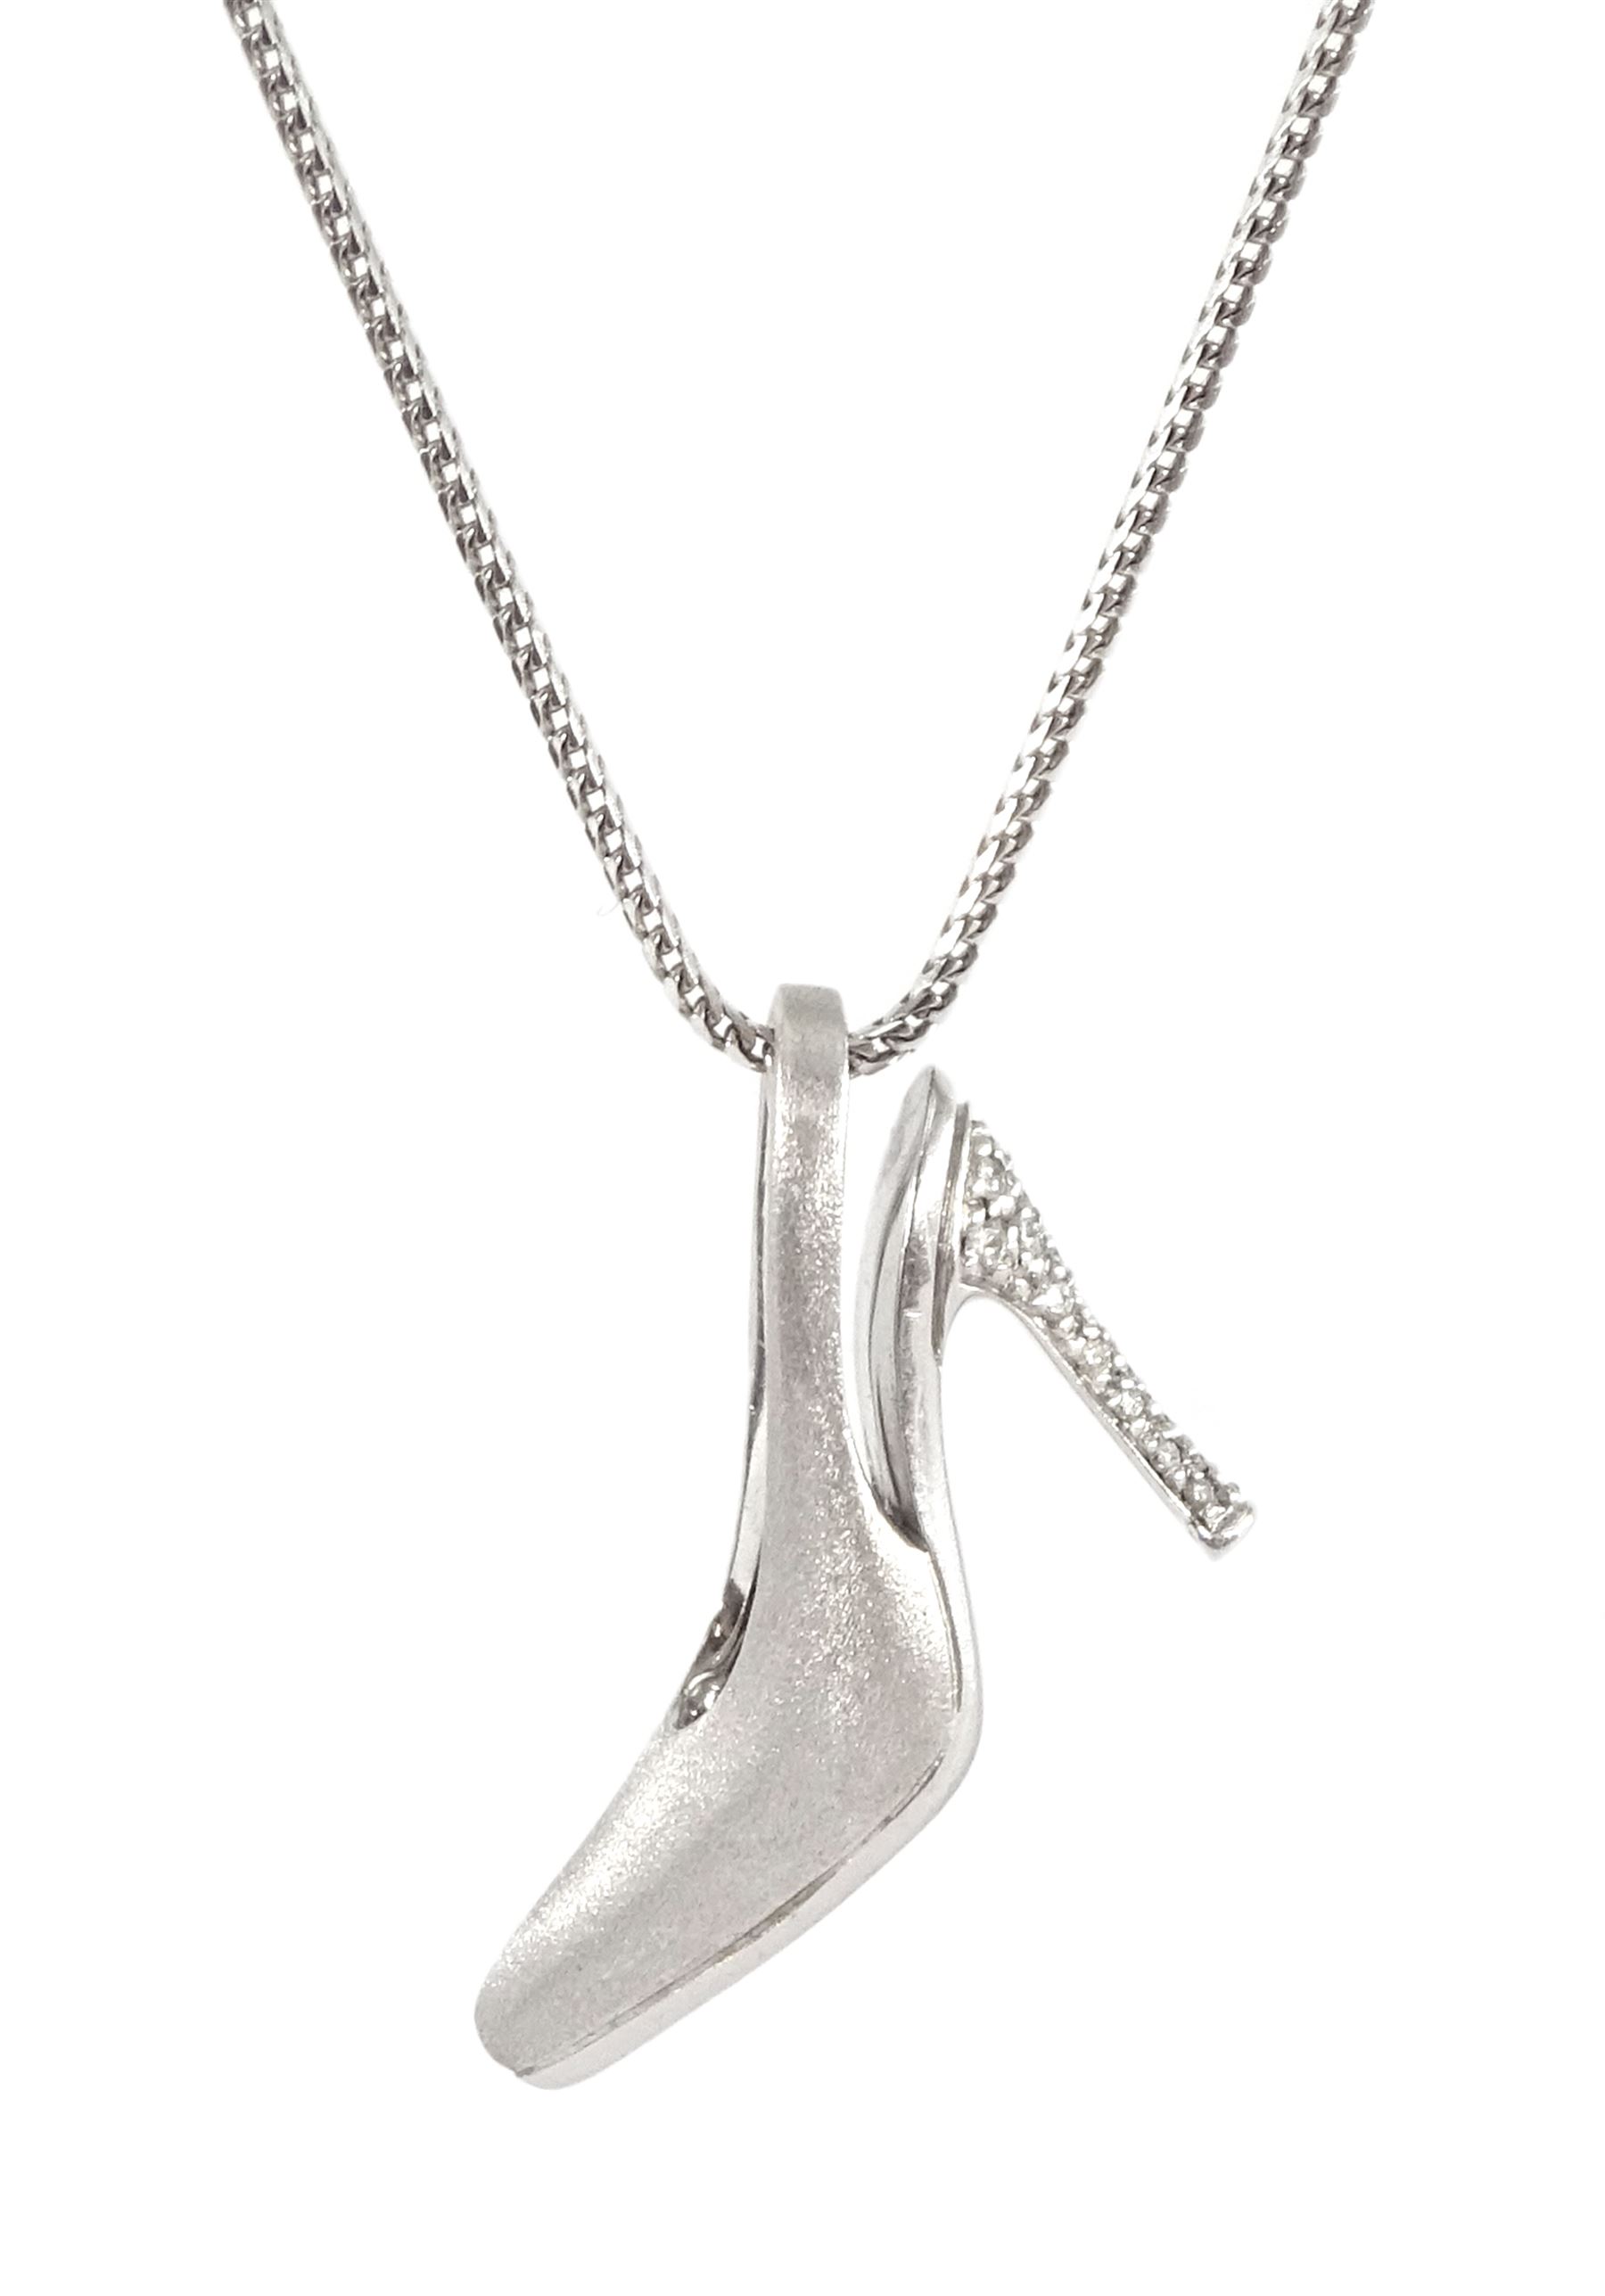 18ct white gold round brilliant cut diamond shoe pendant necklace